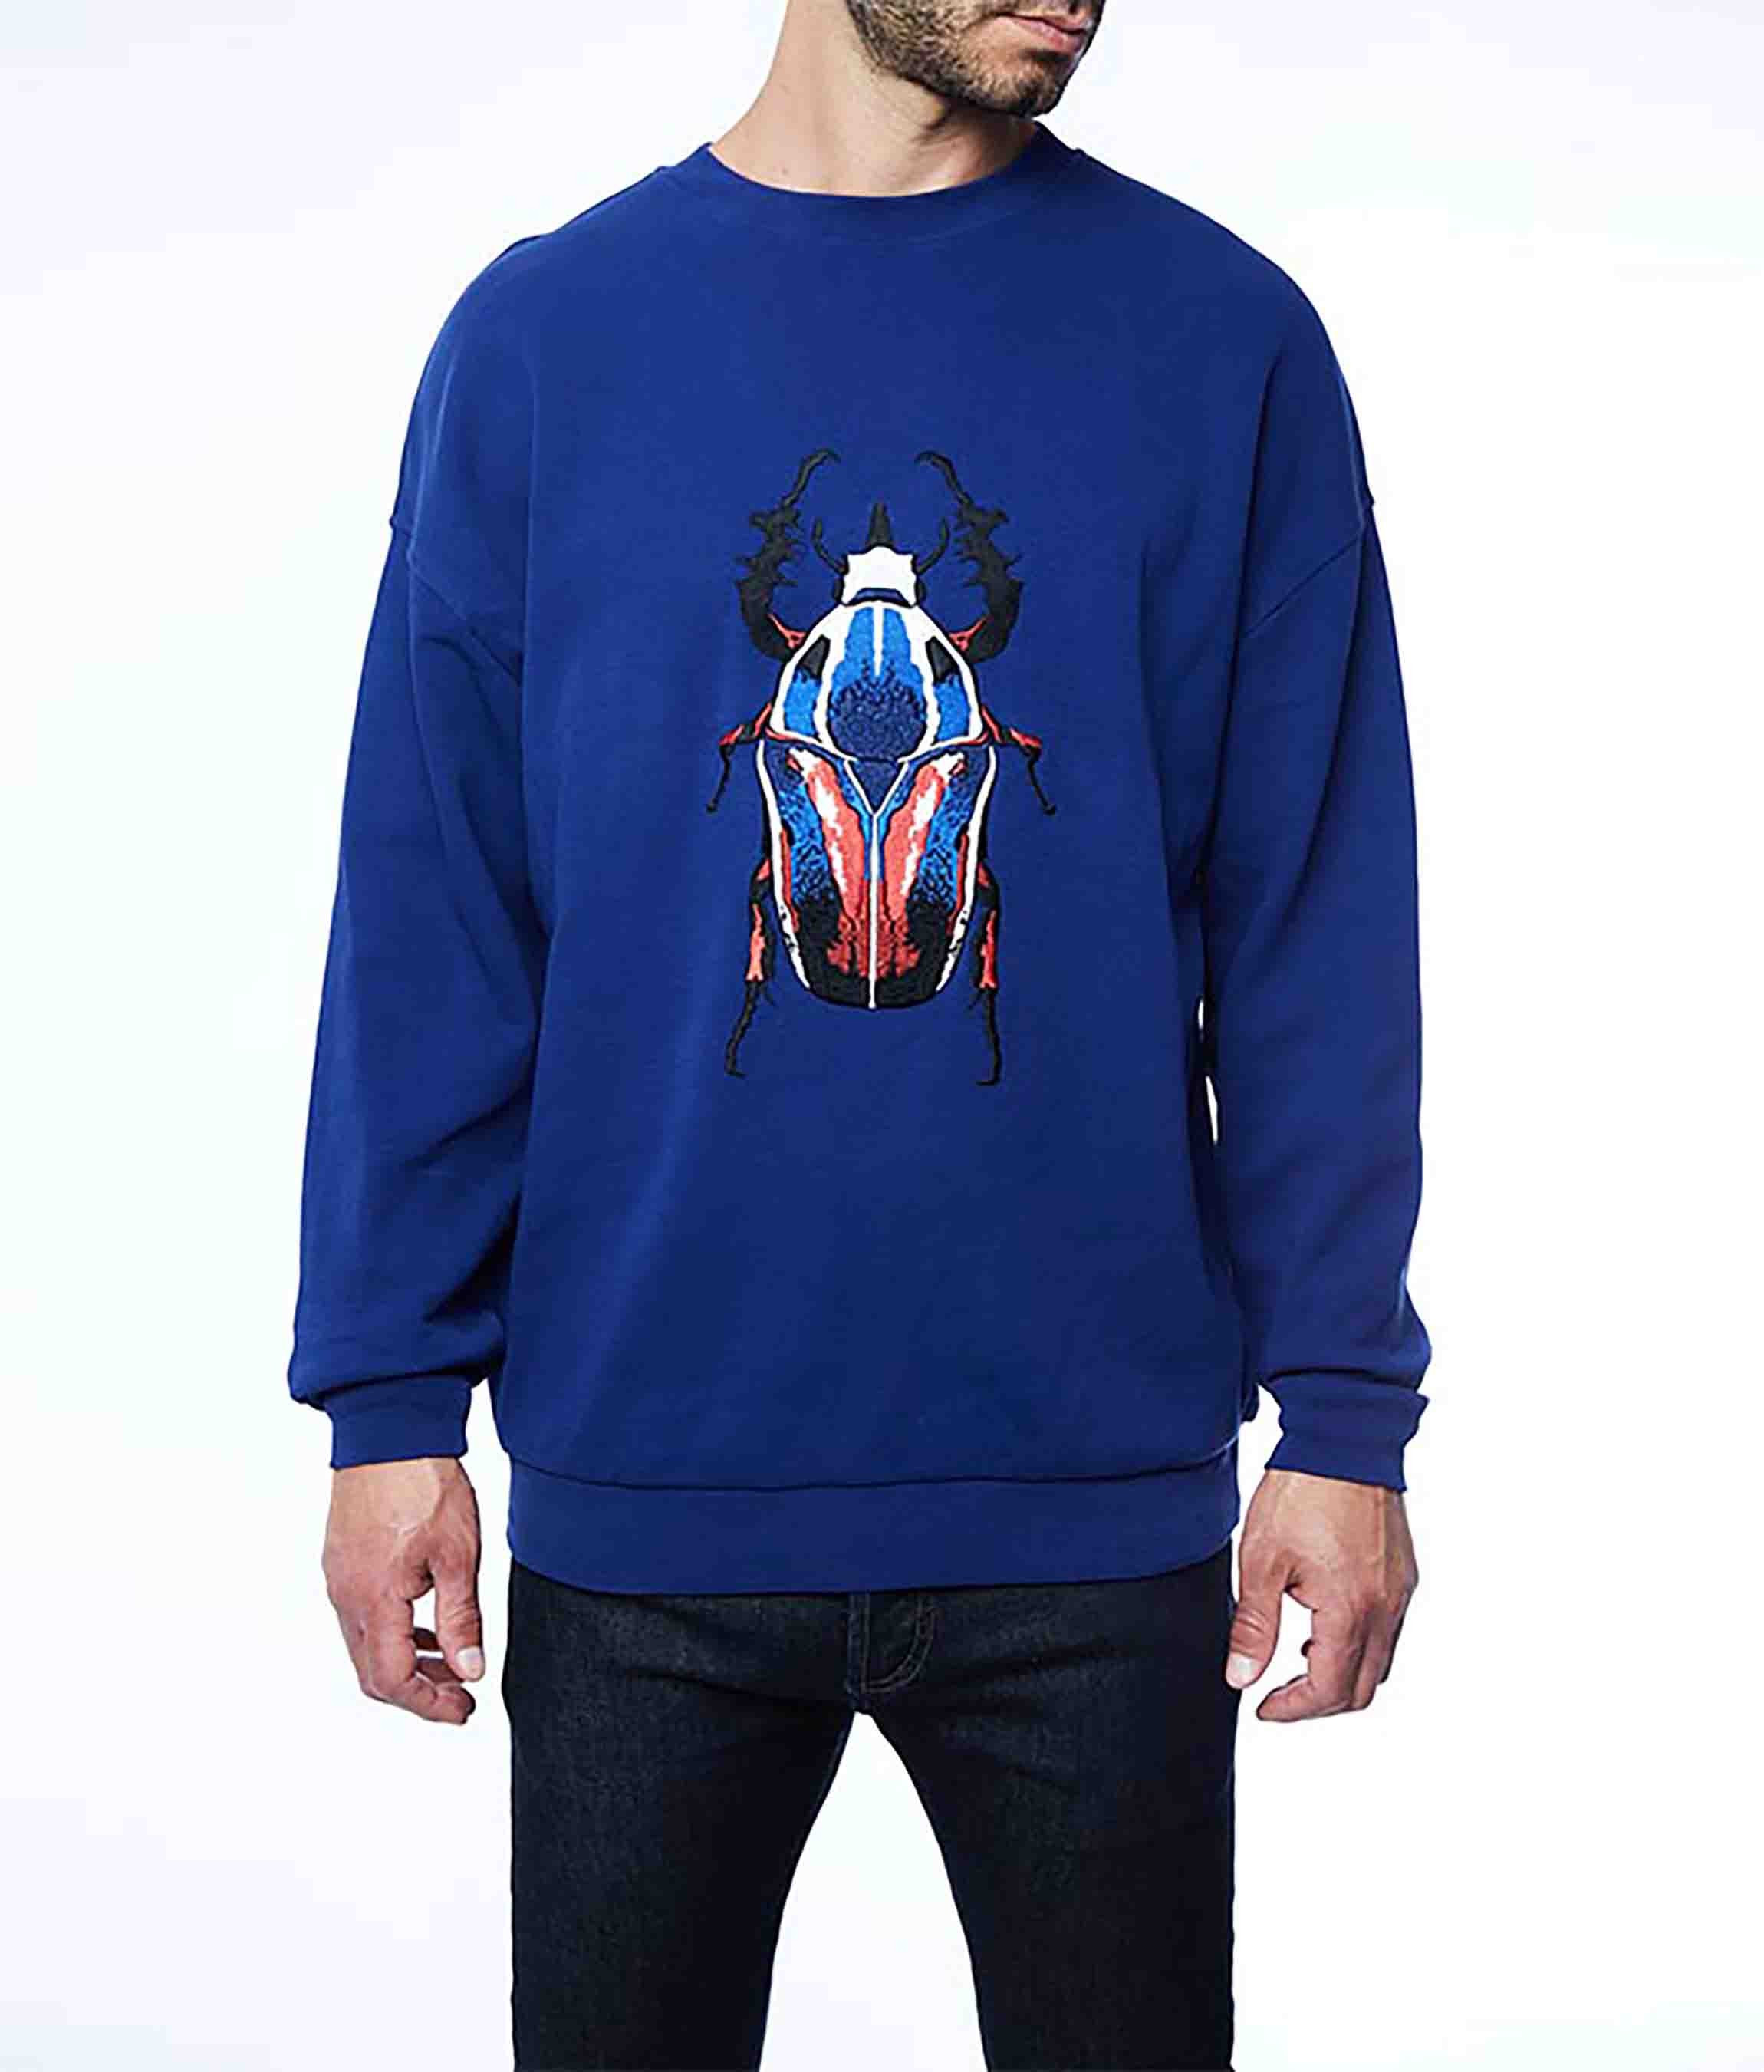 Sweatshirt oversized fit patch brodé scarabée Goliath